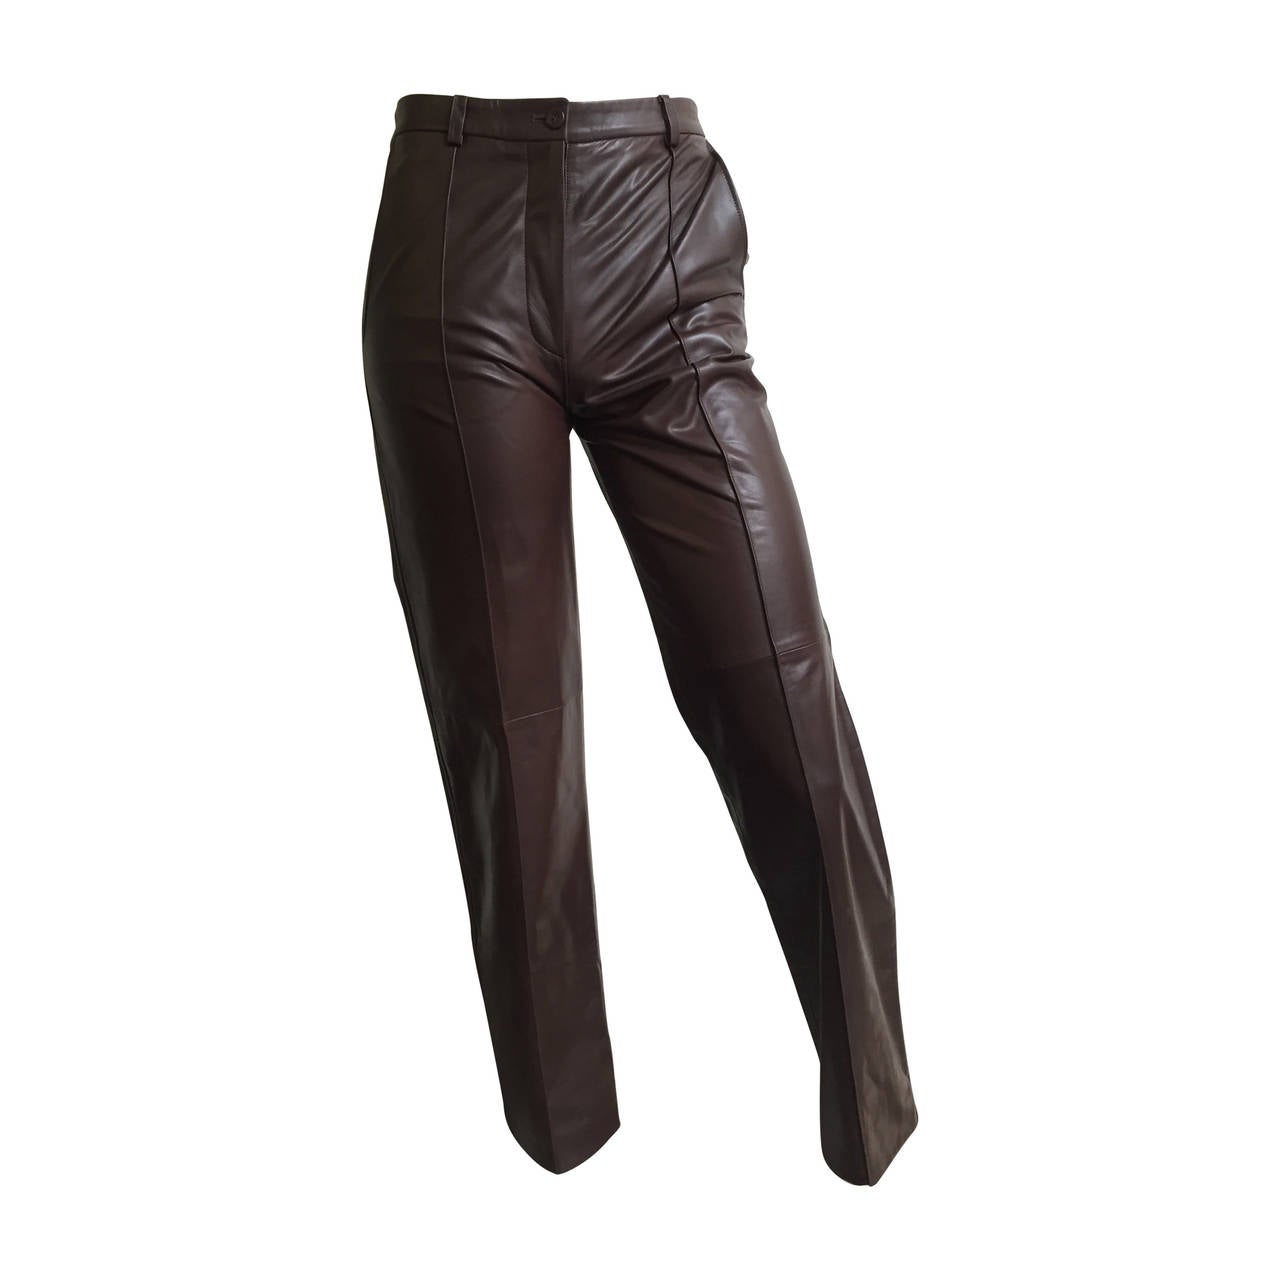 Bottega Veneta Brown Leather Pants Size 4.